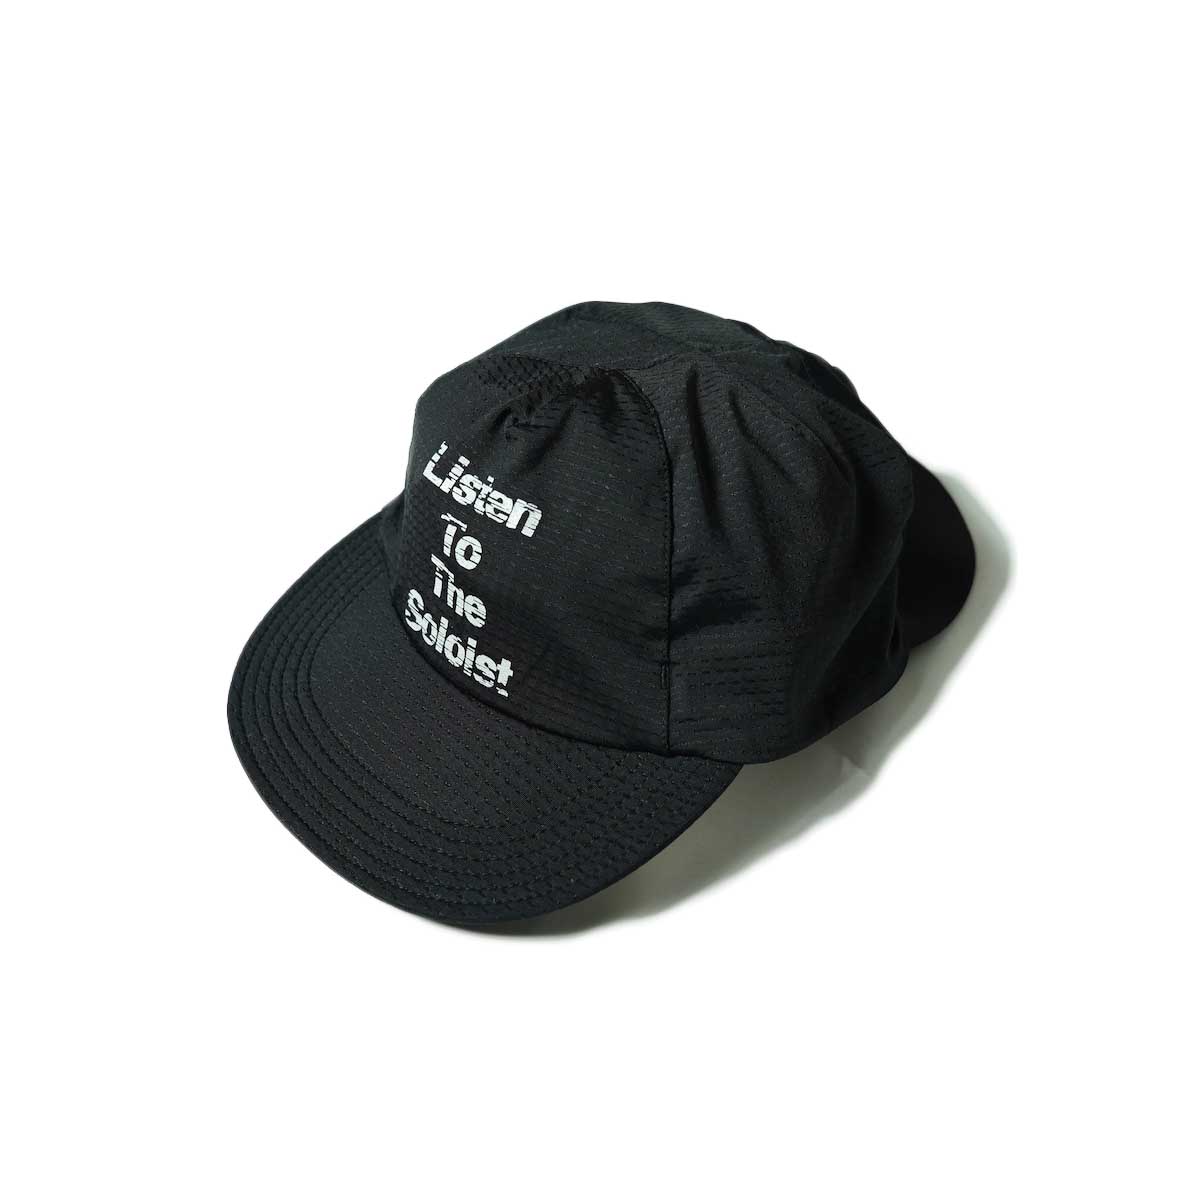 The Soloist / ska.0001 two-way cycling cap.(Black)